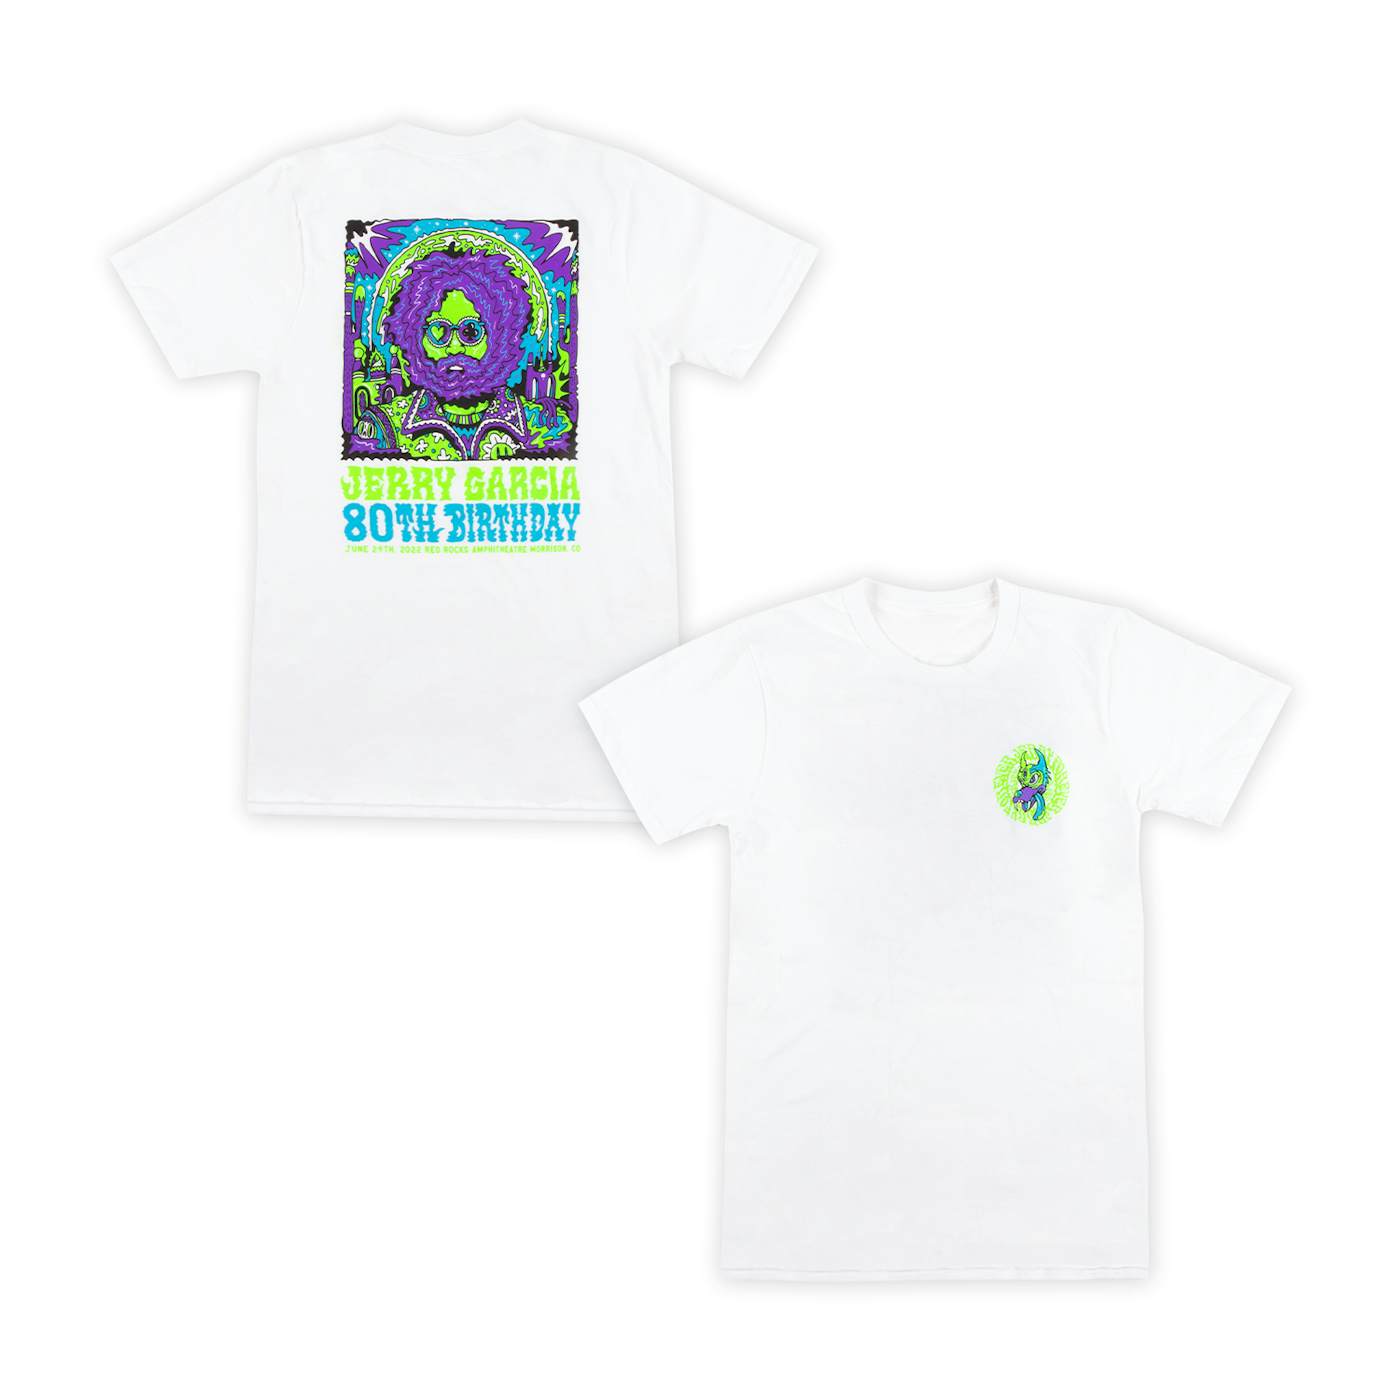 Phish Camp Retro Longsleeve T-Shirt - Olive/Cream/SeaBlue - Medium